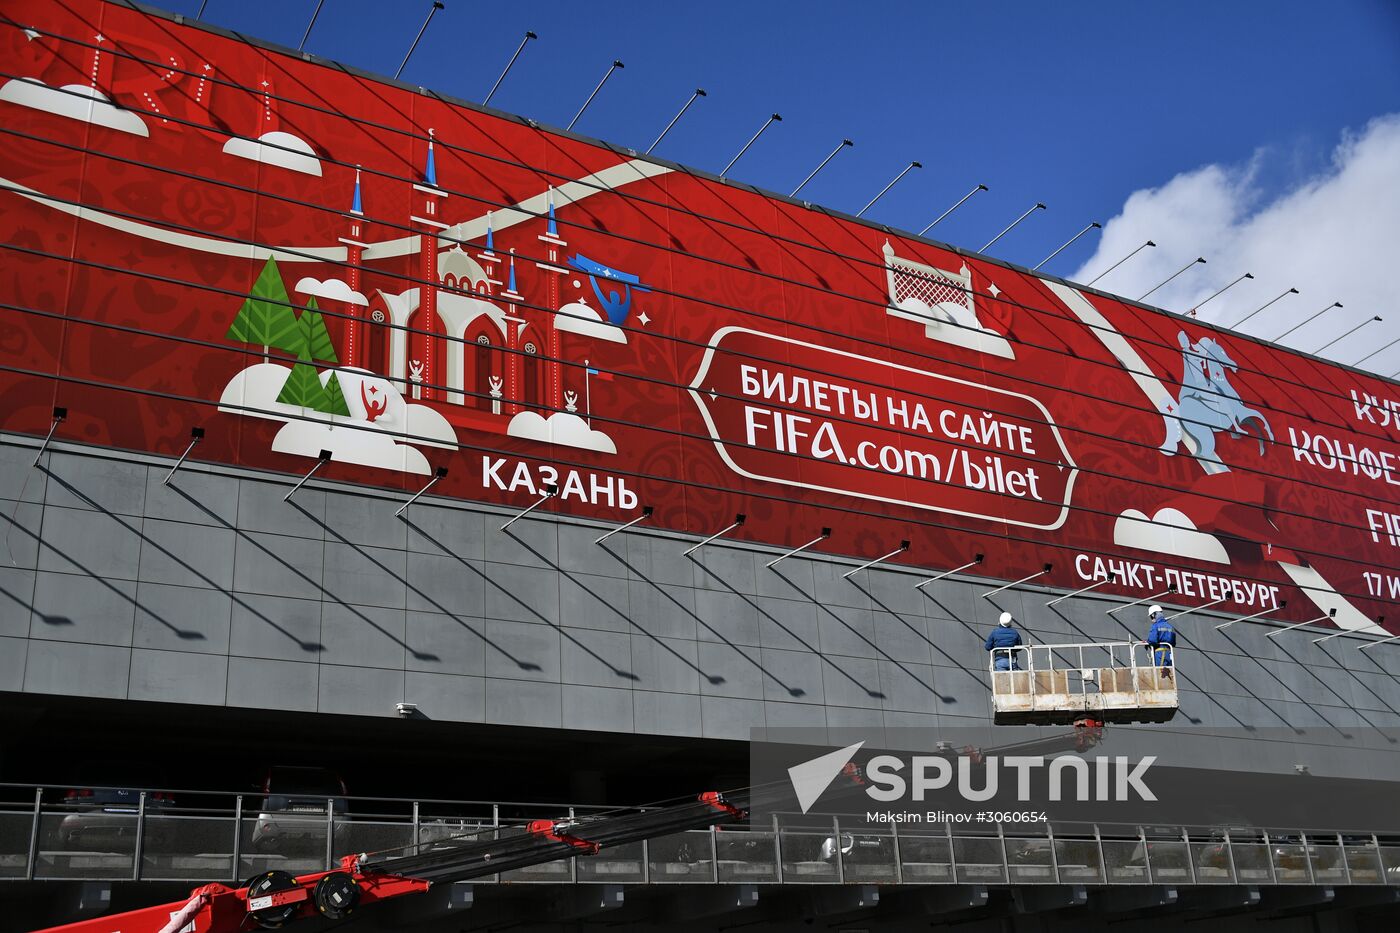 Biggest FIFA Confederations Cup 2017 billboard set up at Aeroexpress Terminal in Sheremetyevo